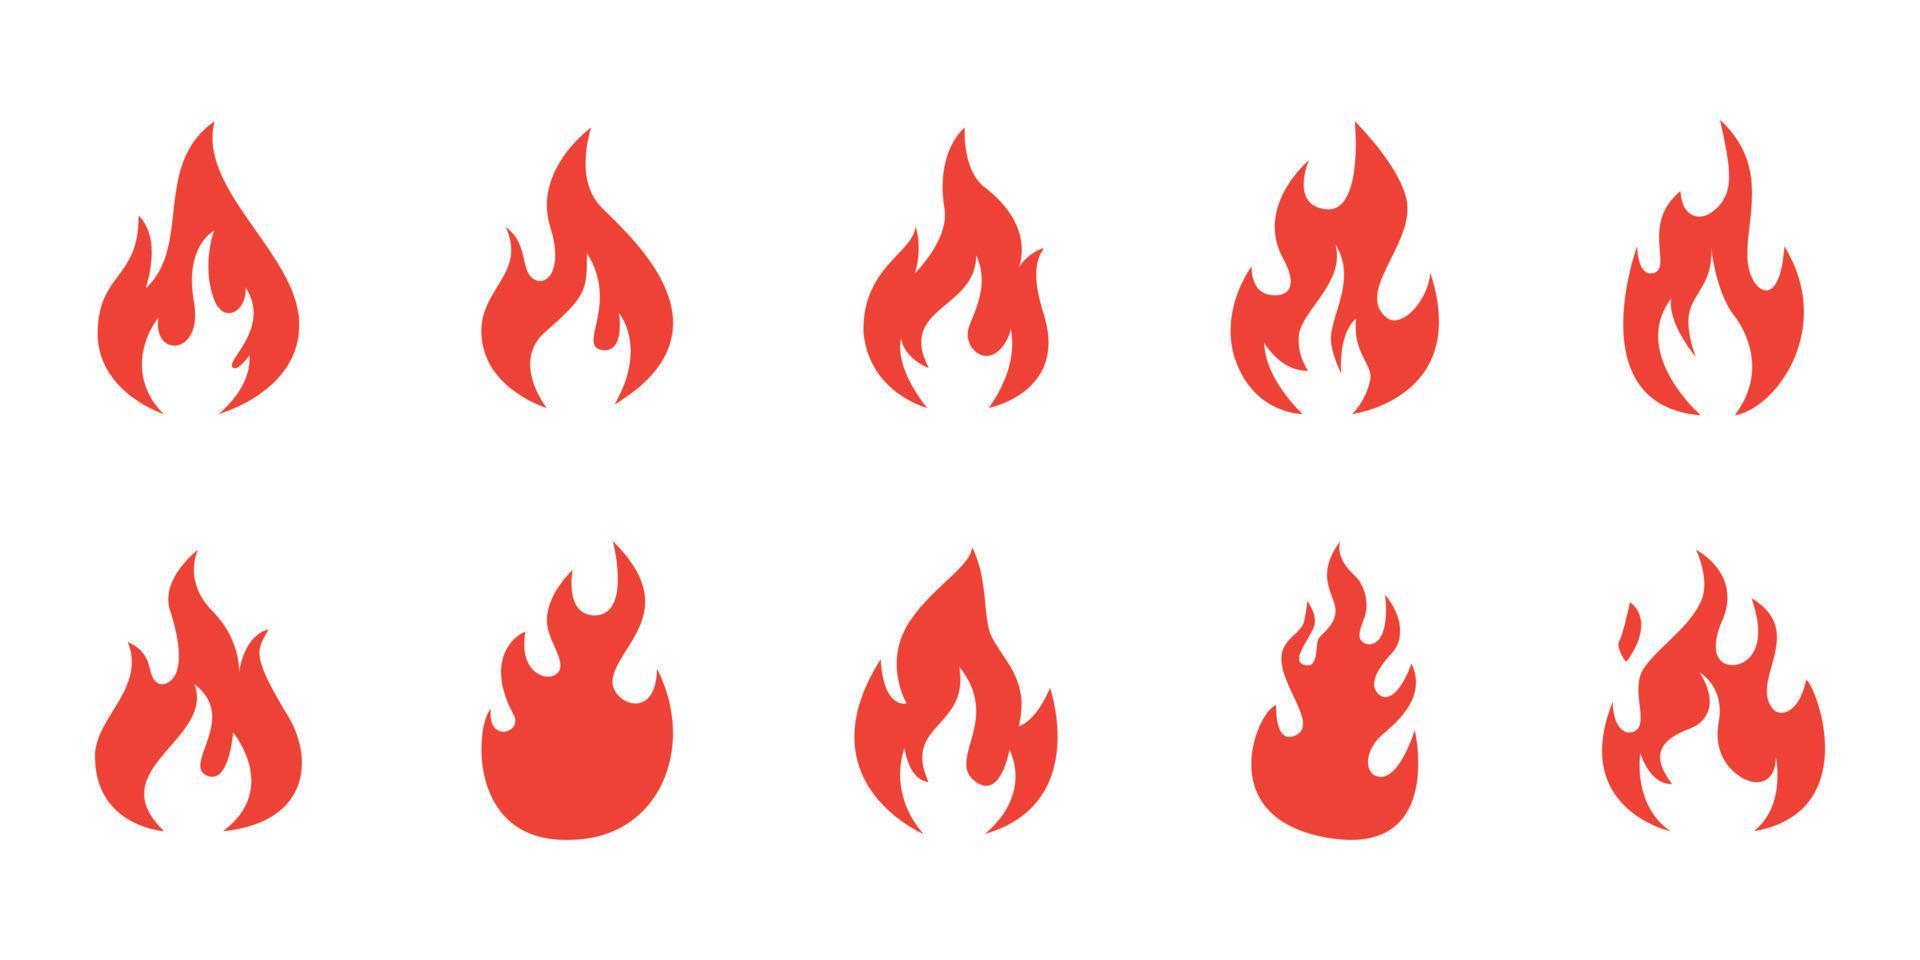 ensemble d'illustration de flammes de feu. conception d'icônes vectorielles de feu simple vecteur